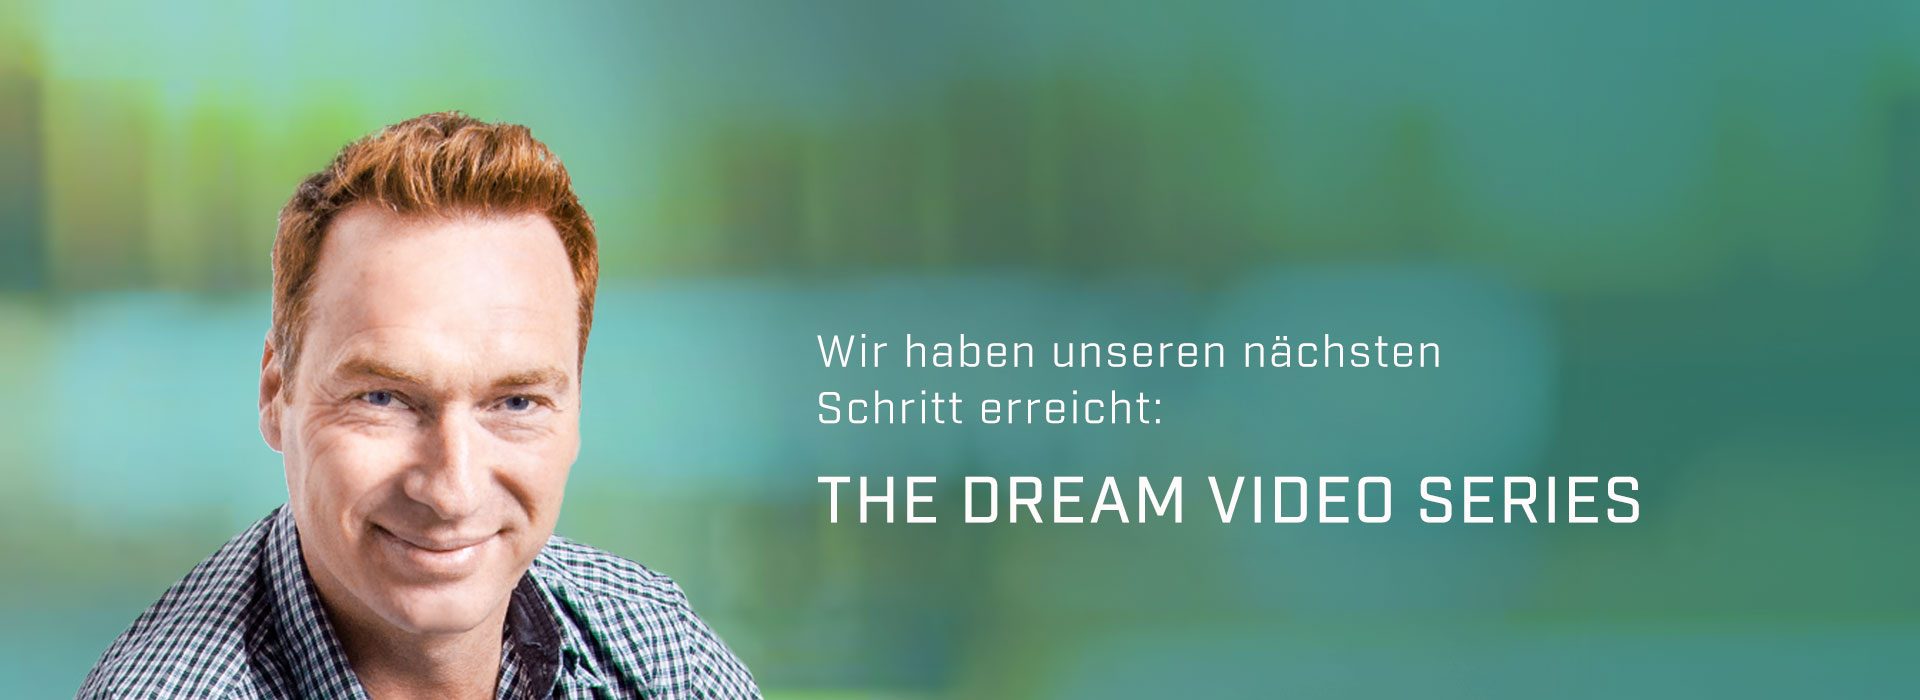 THE DREAM VIDEO SERIE